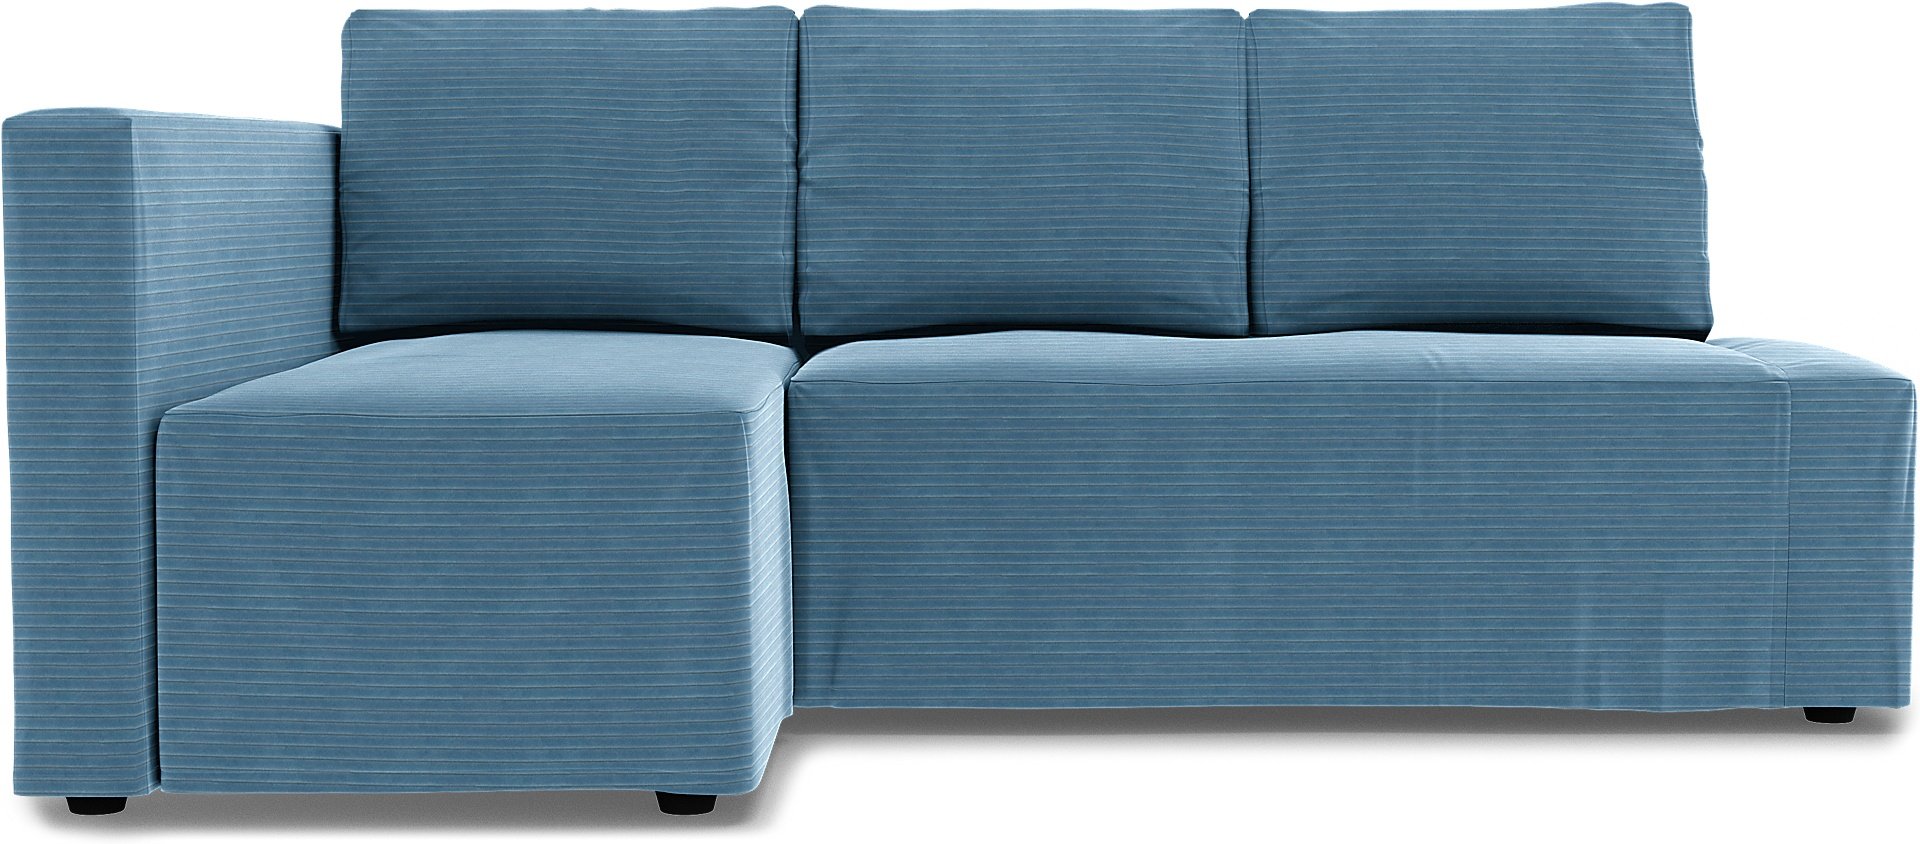 IKEA - Friheten Sofa Bed with Left Chaise Cover, Sky Blue, Corduroy - Bemz